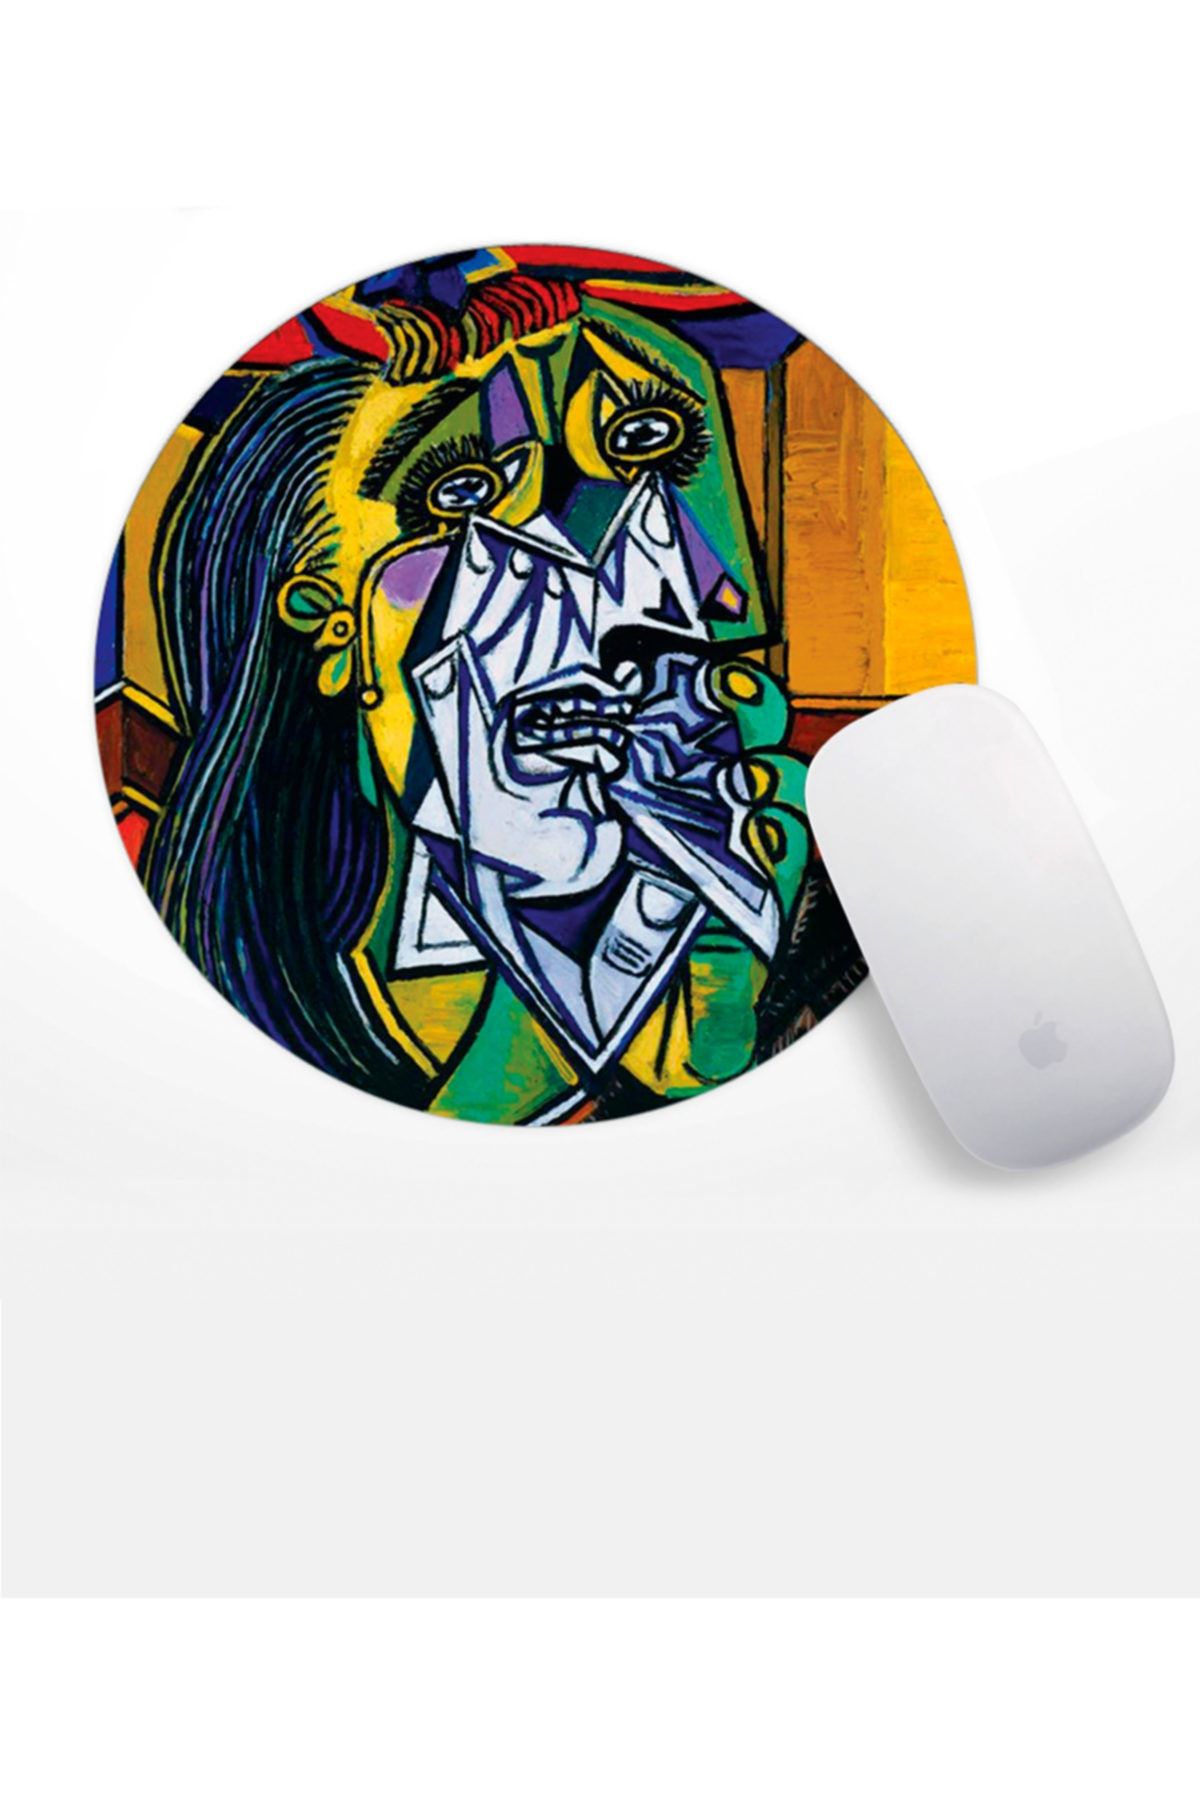 2K Dizayn Picasso Ağlayan Kadın Tasarım Mouse Pad